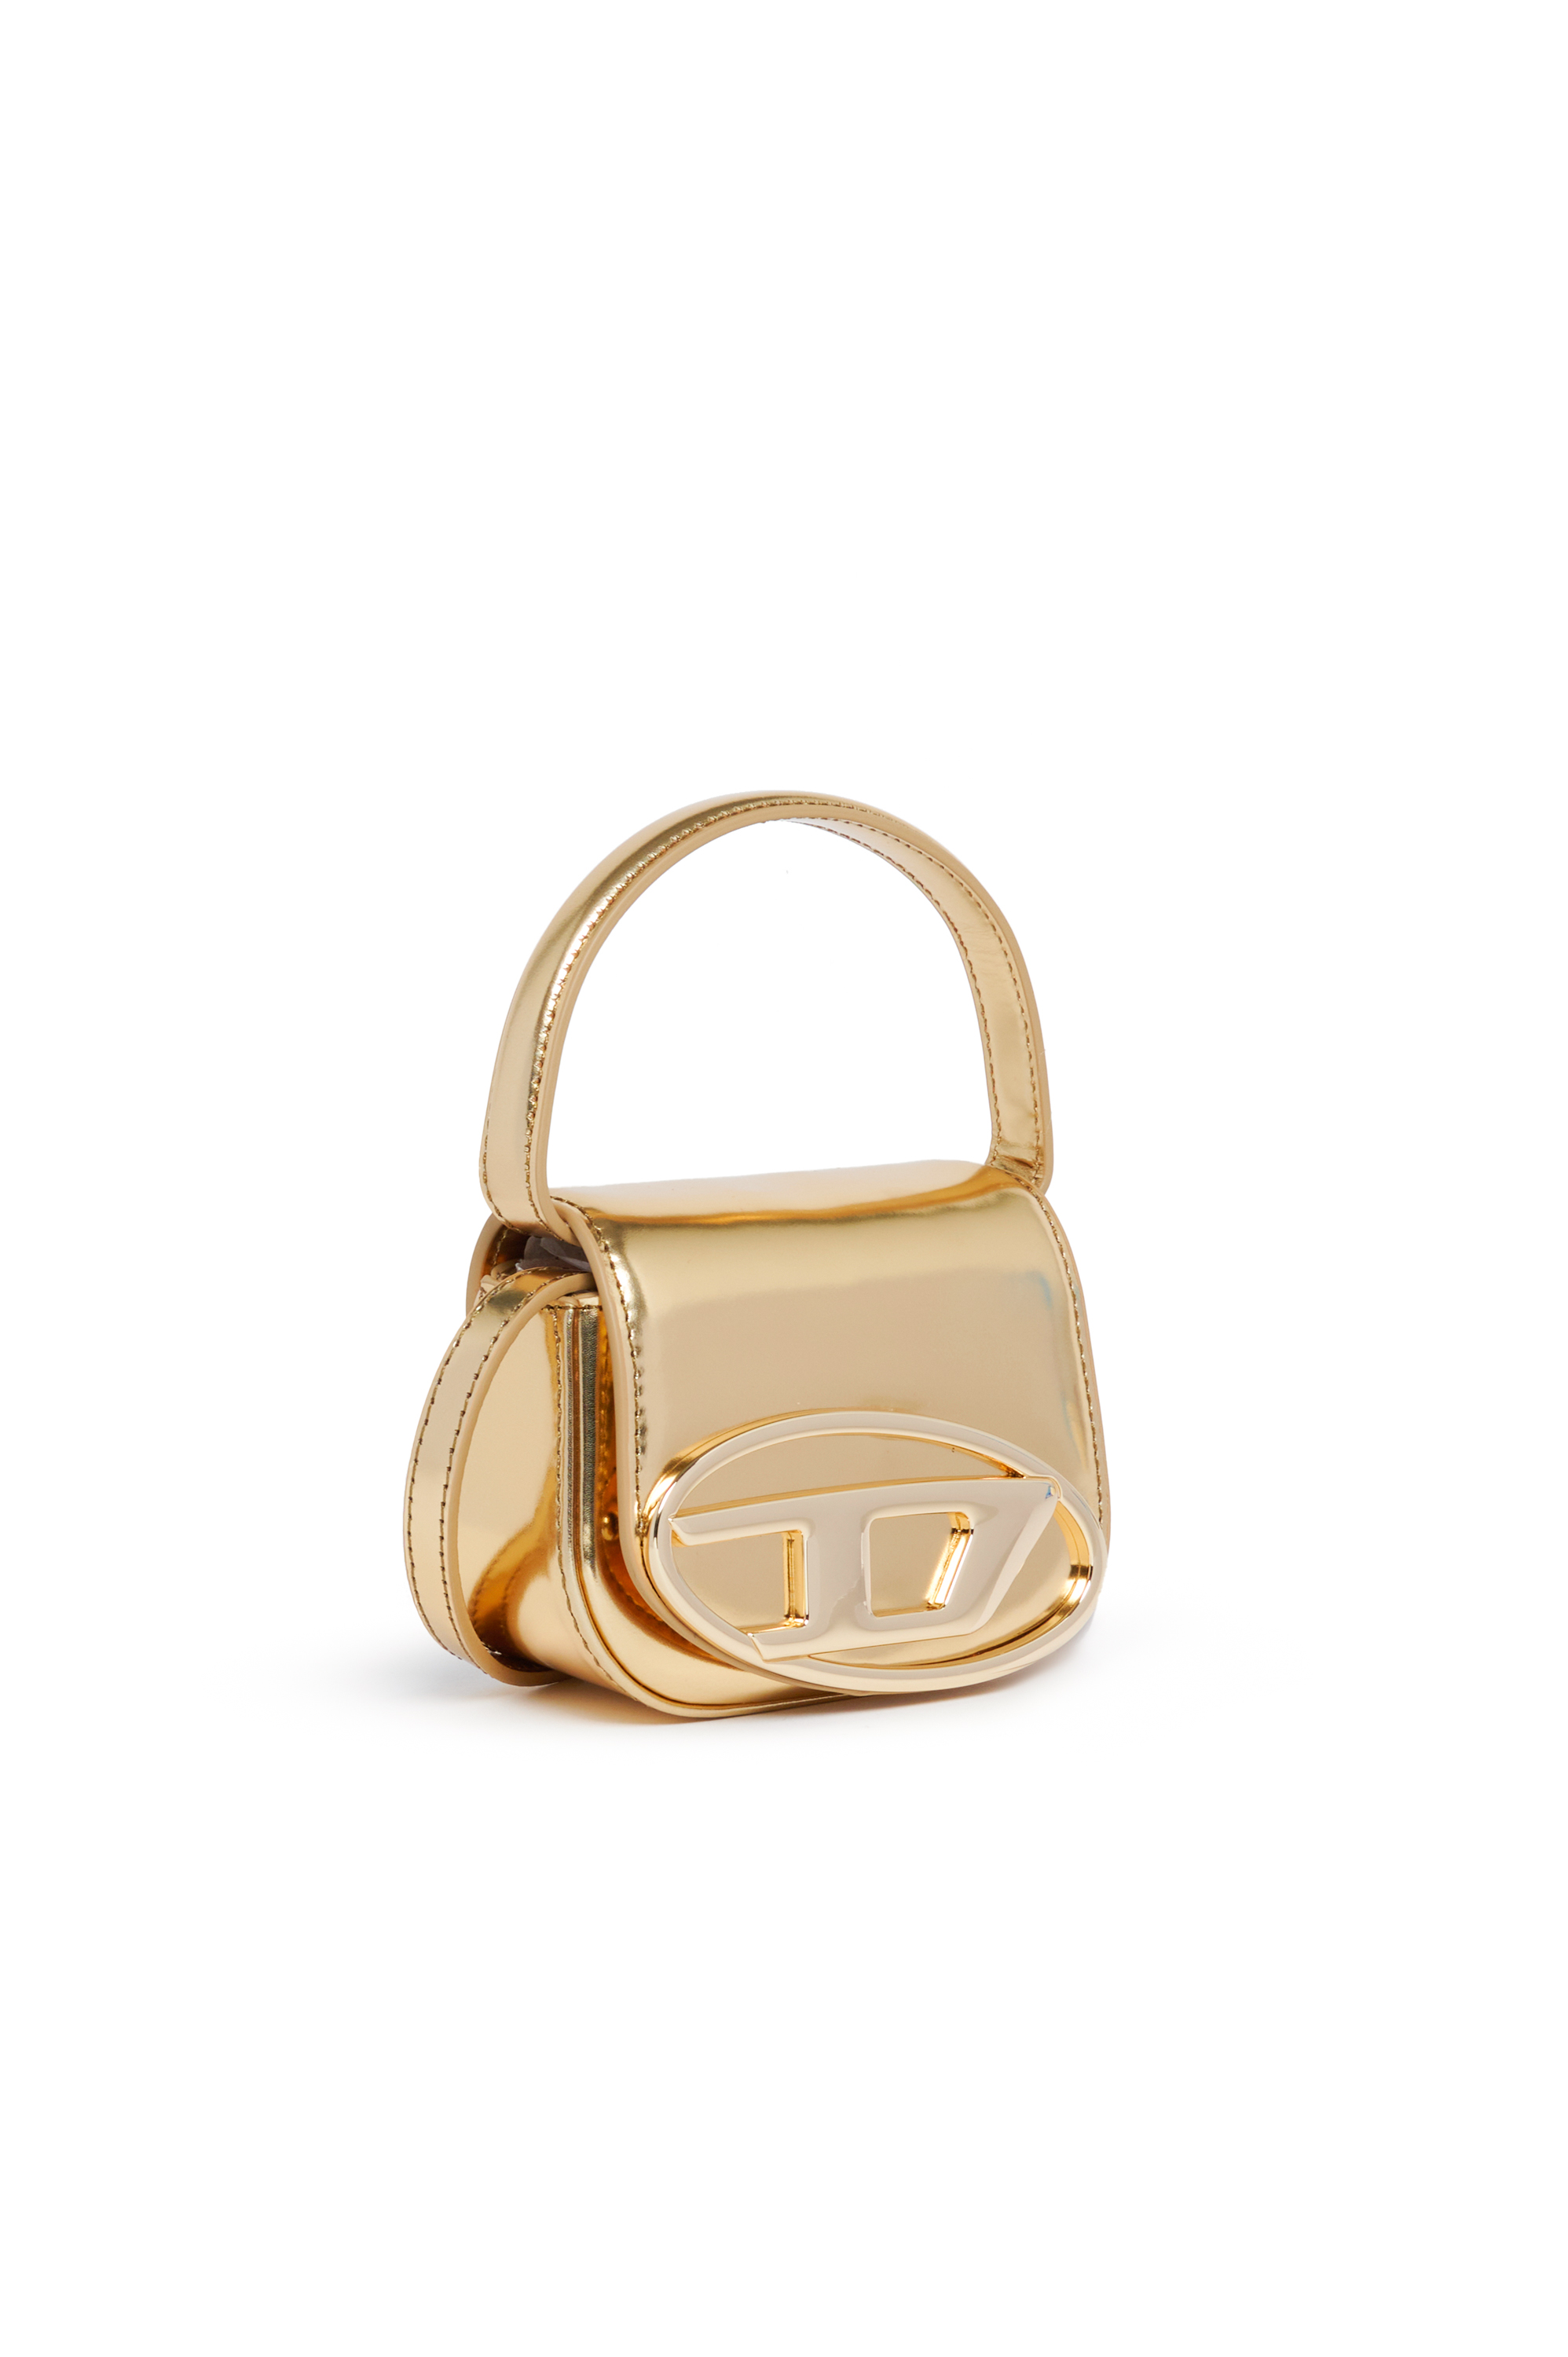 Diesel - 1DR XS, Woman Iconic mini bag in metallic leather in Oro - Image 3